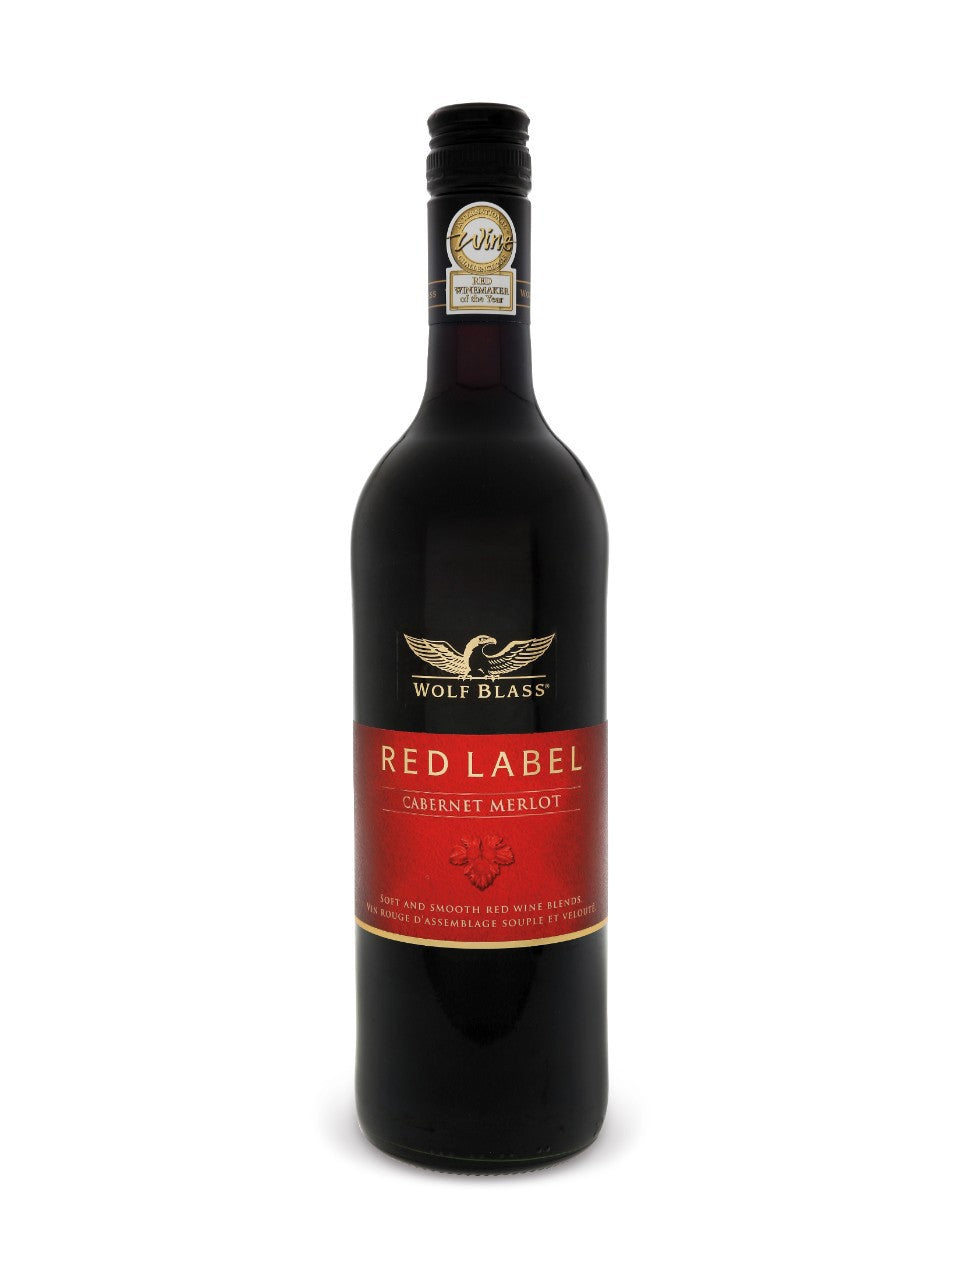 Wolf Blass Red Label Cabernet Merlot Blend 750 ml bottle